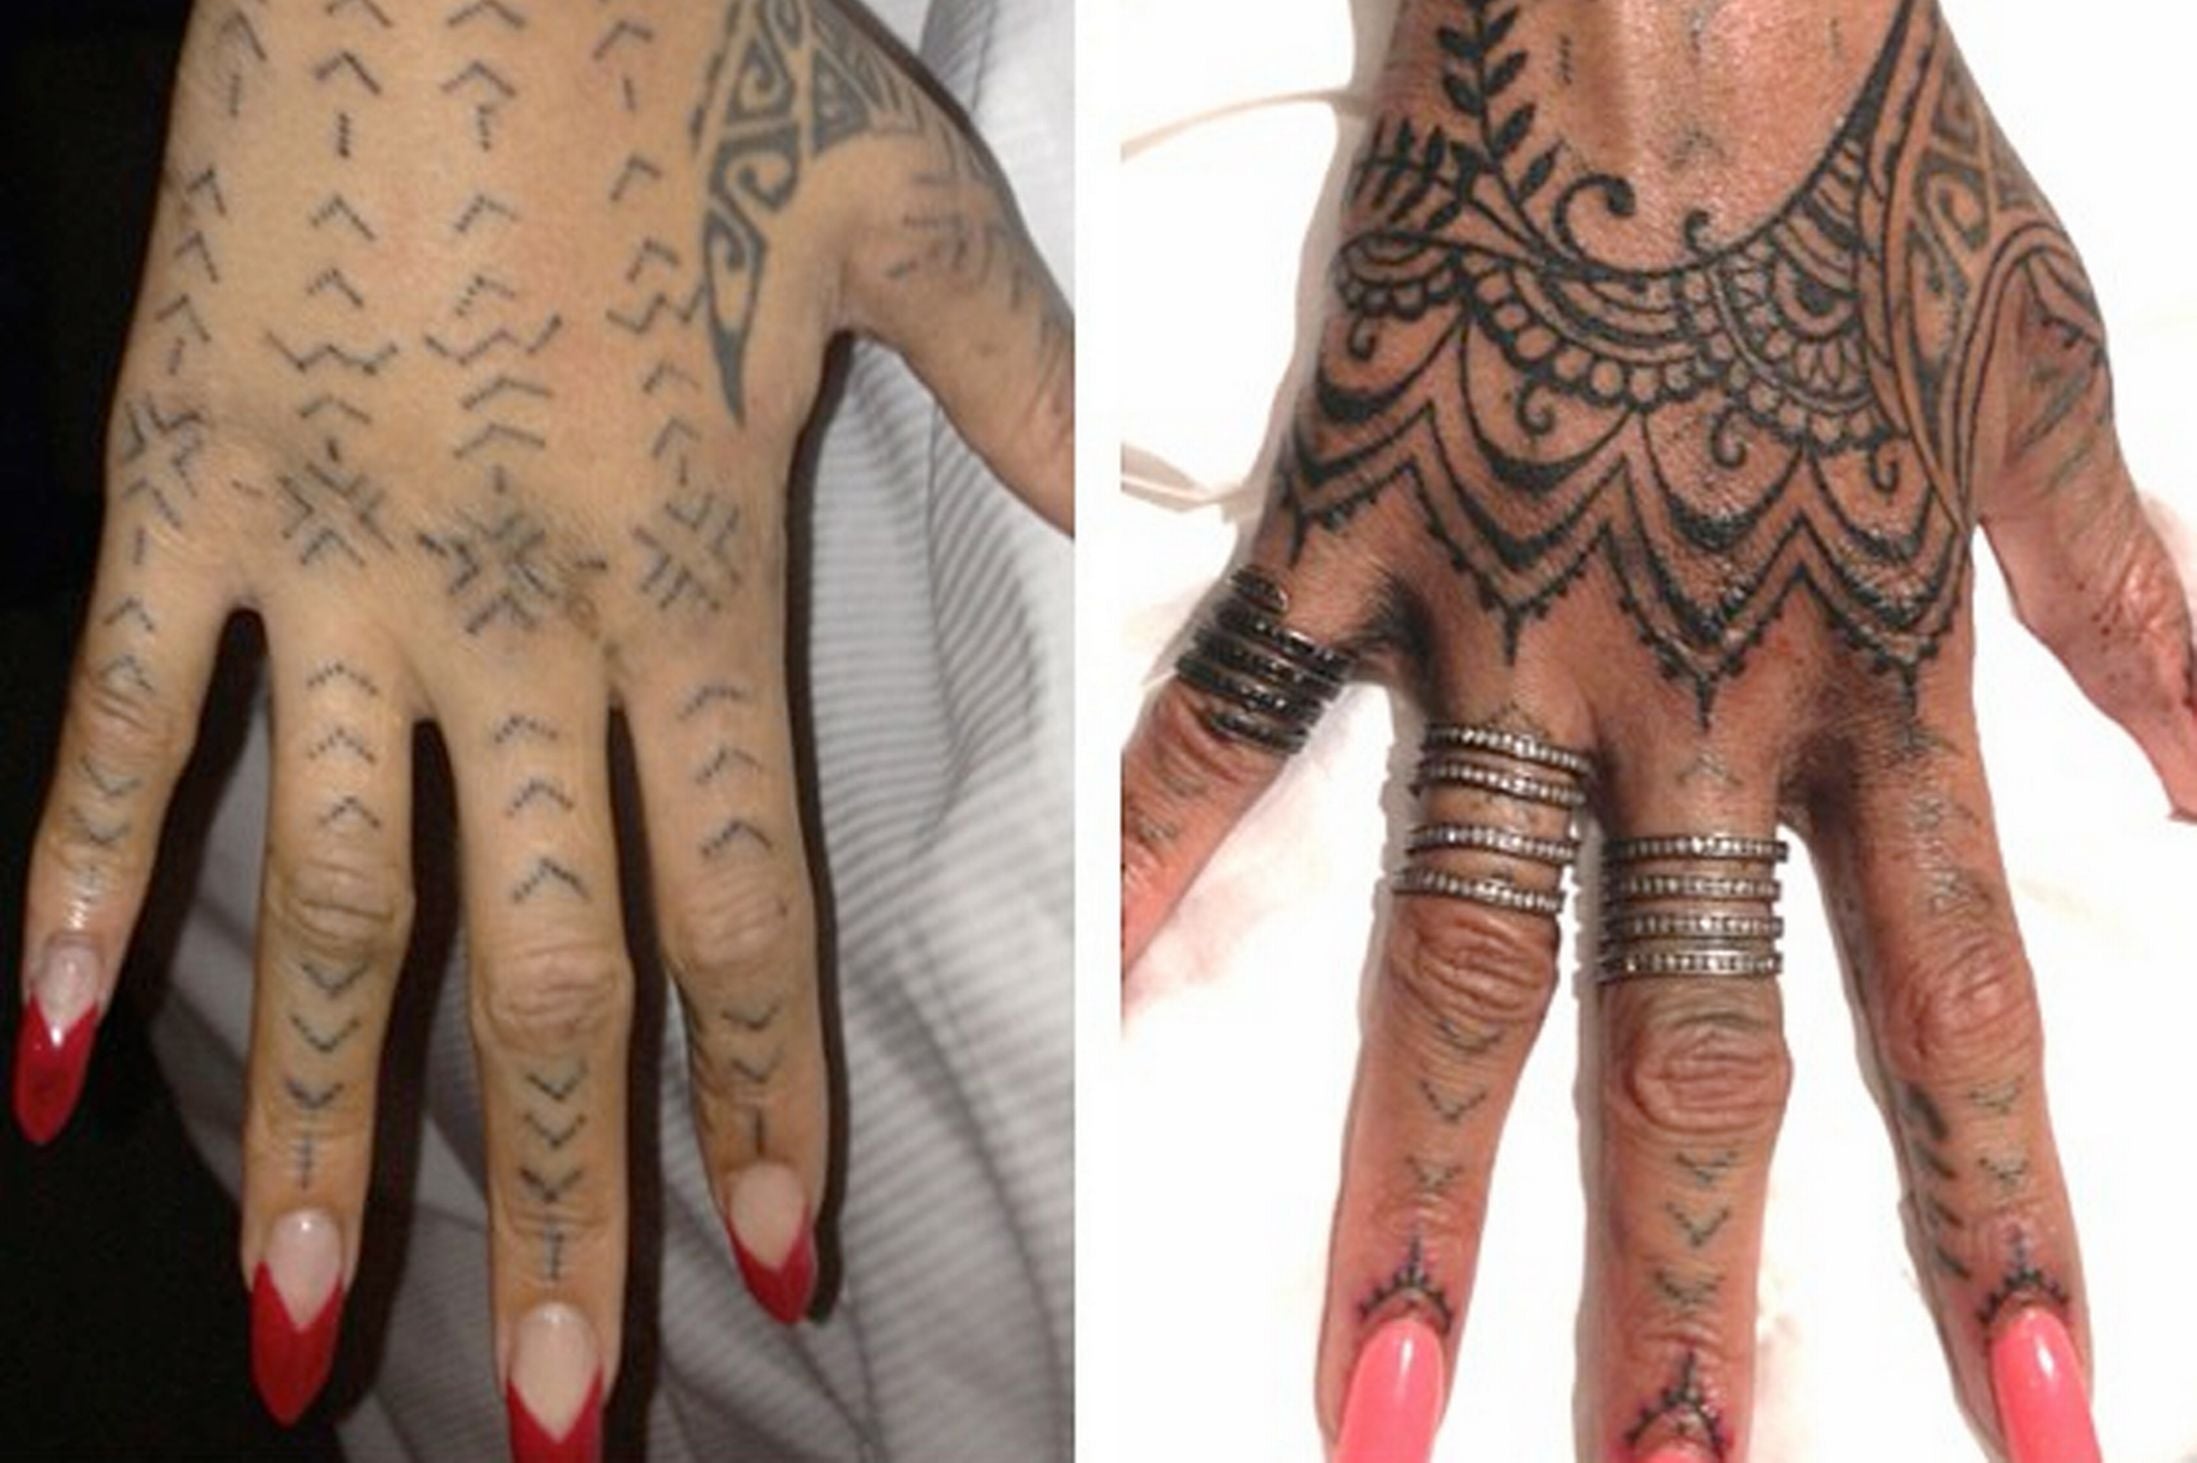 1. Rihanna's "Shhh..." finger tattoo - wide 2